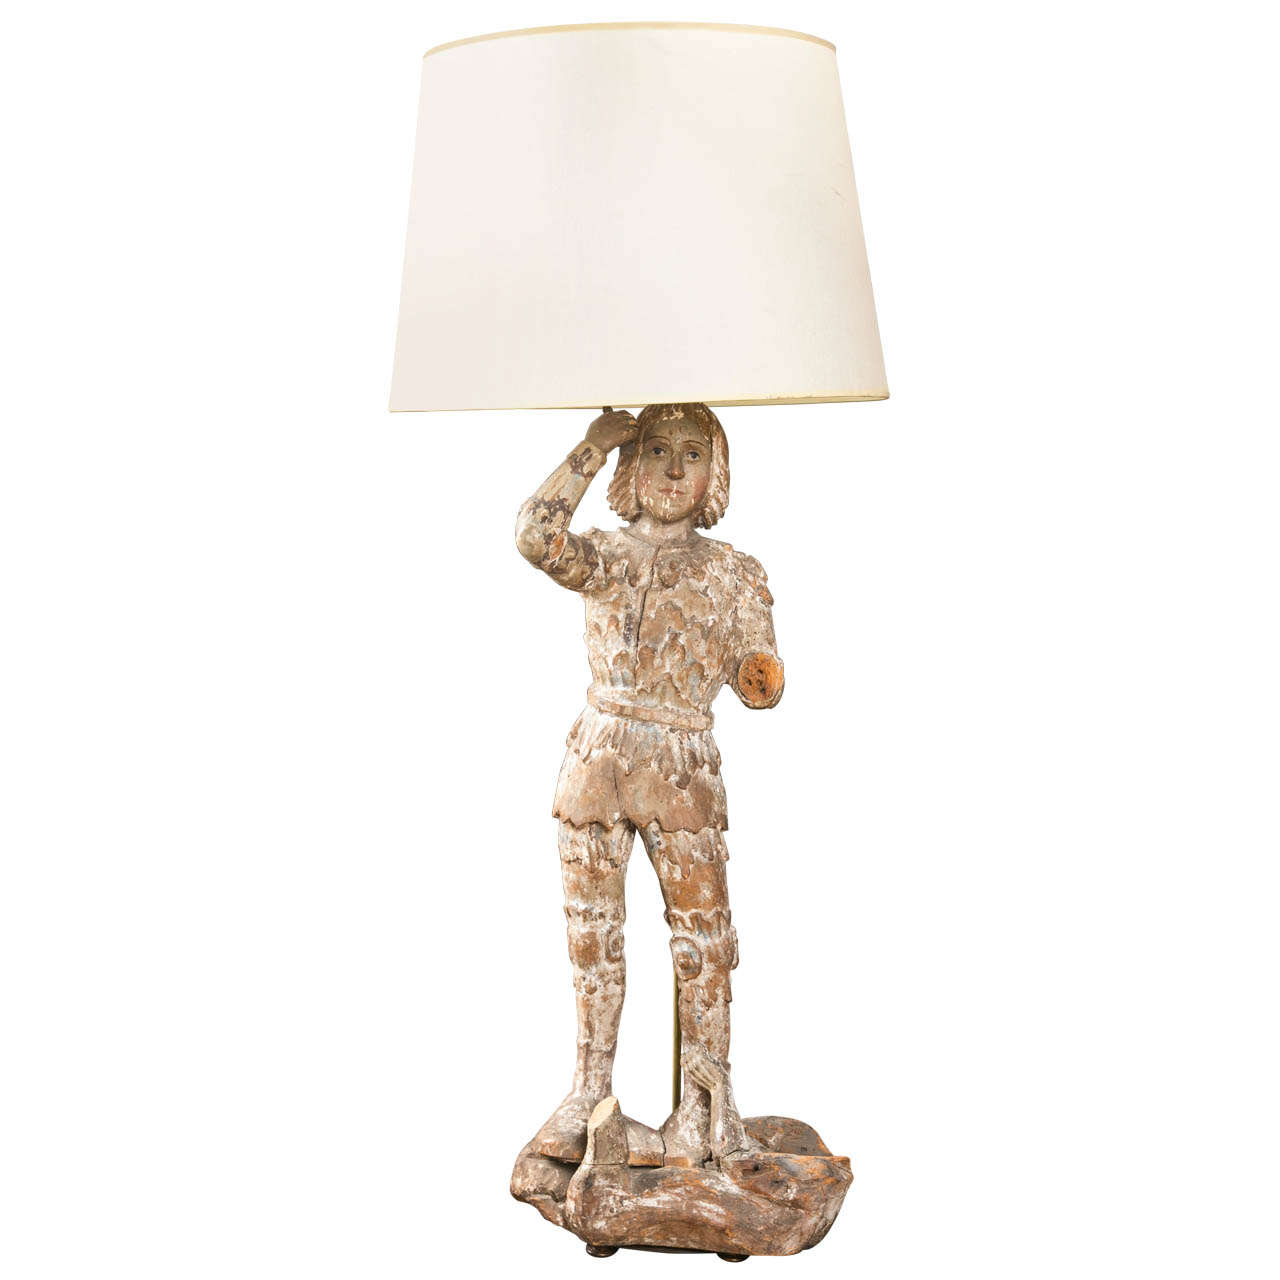 St. Michael Statue Lamp For Sale